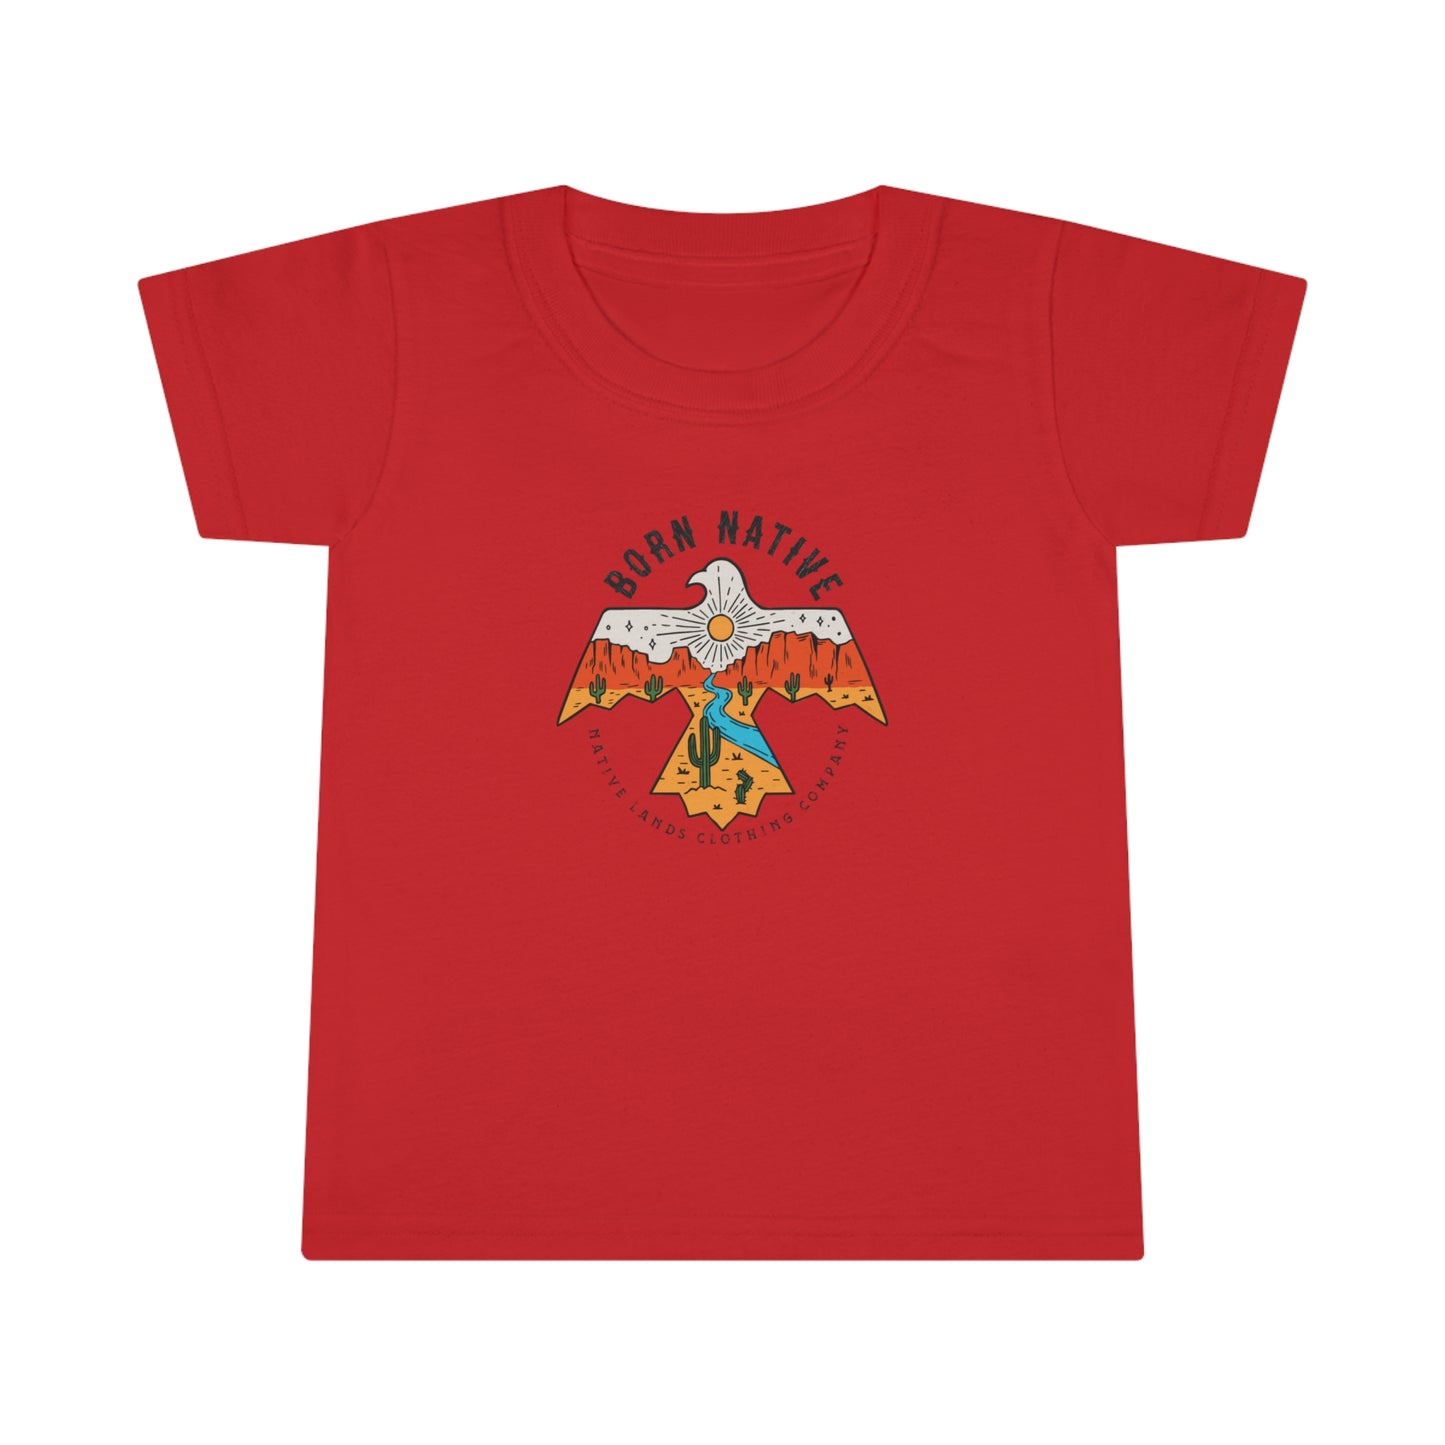 Toddler Thunderbird Shirt Cotton Native American